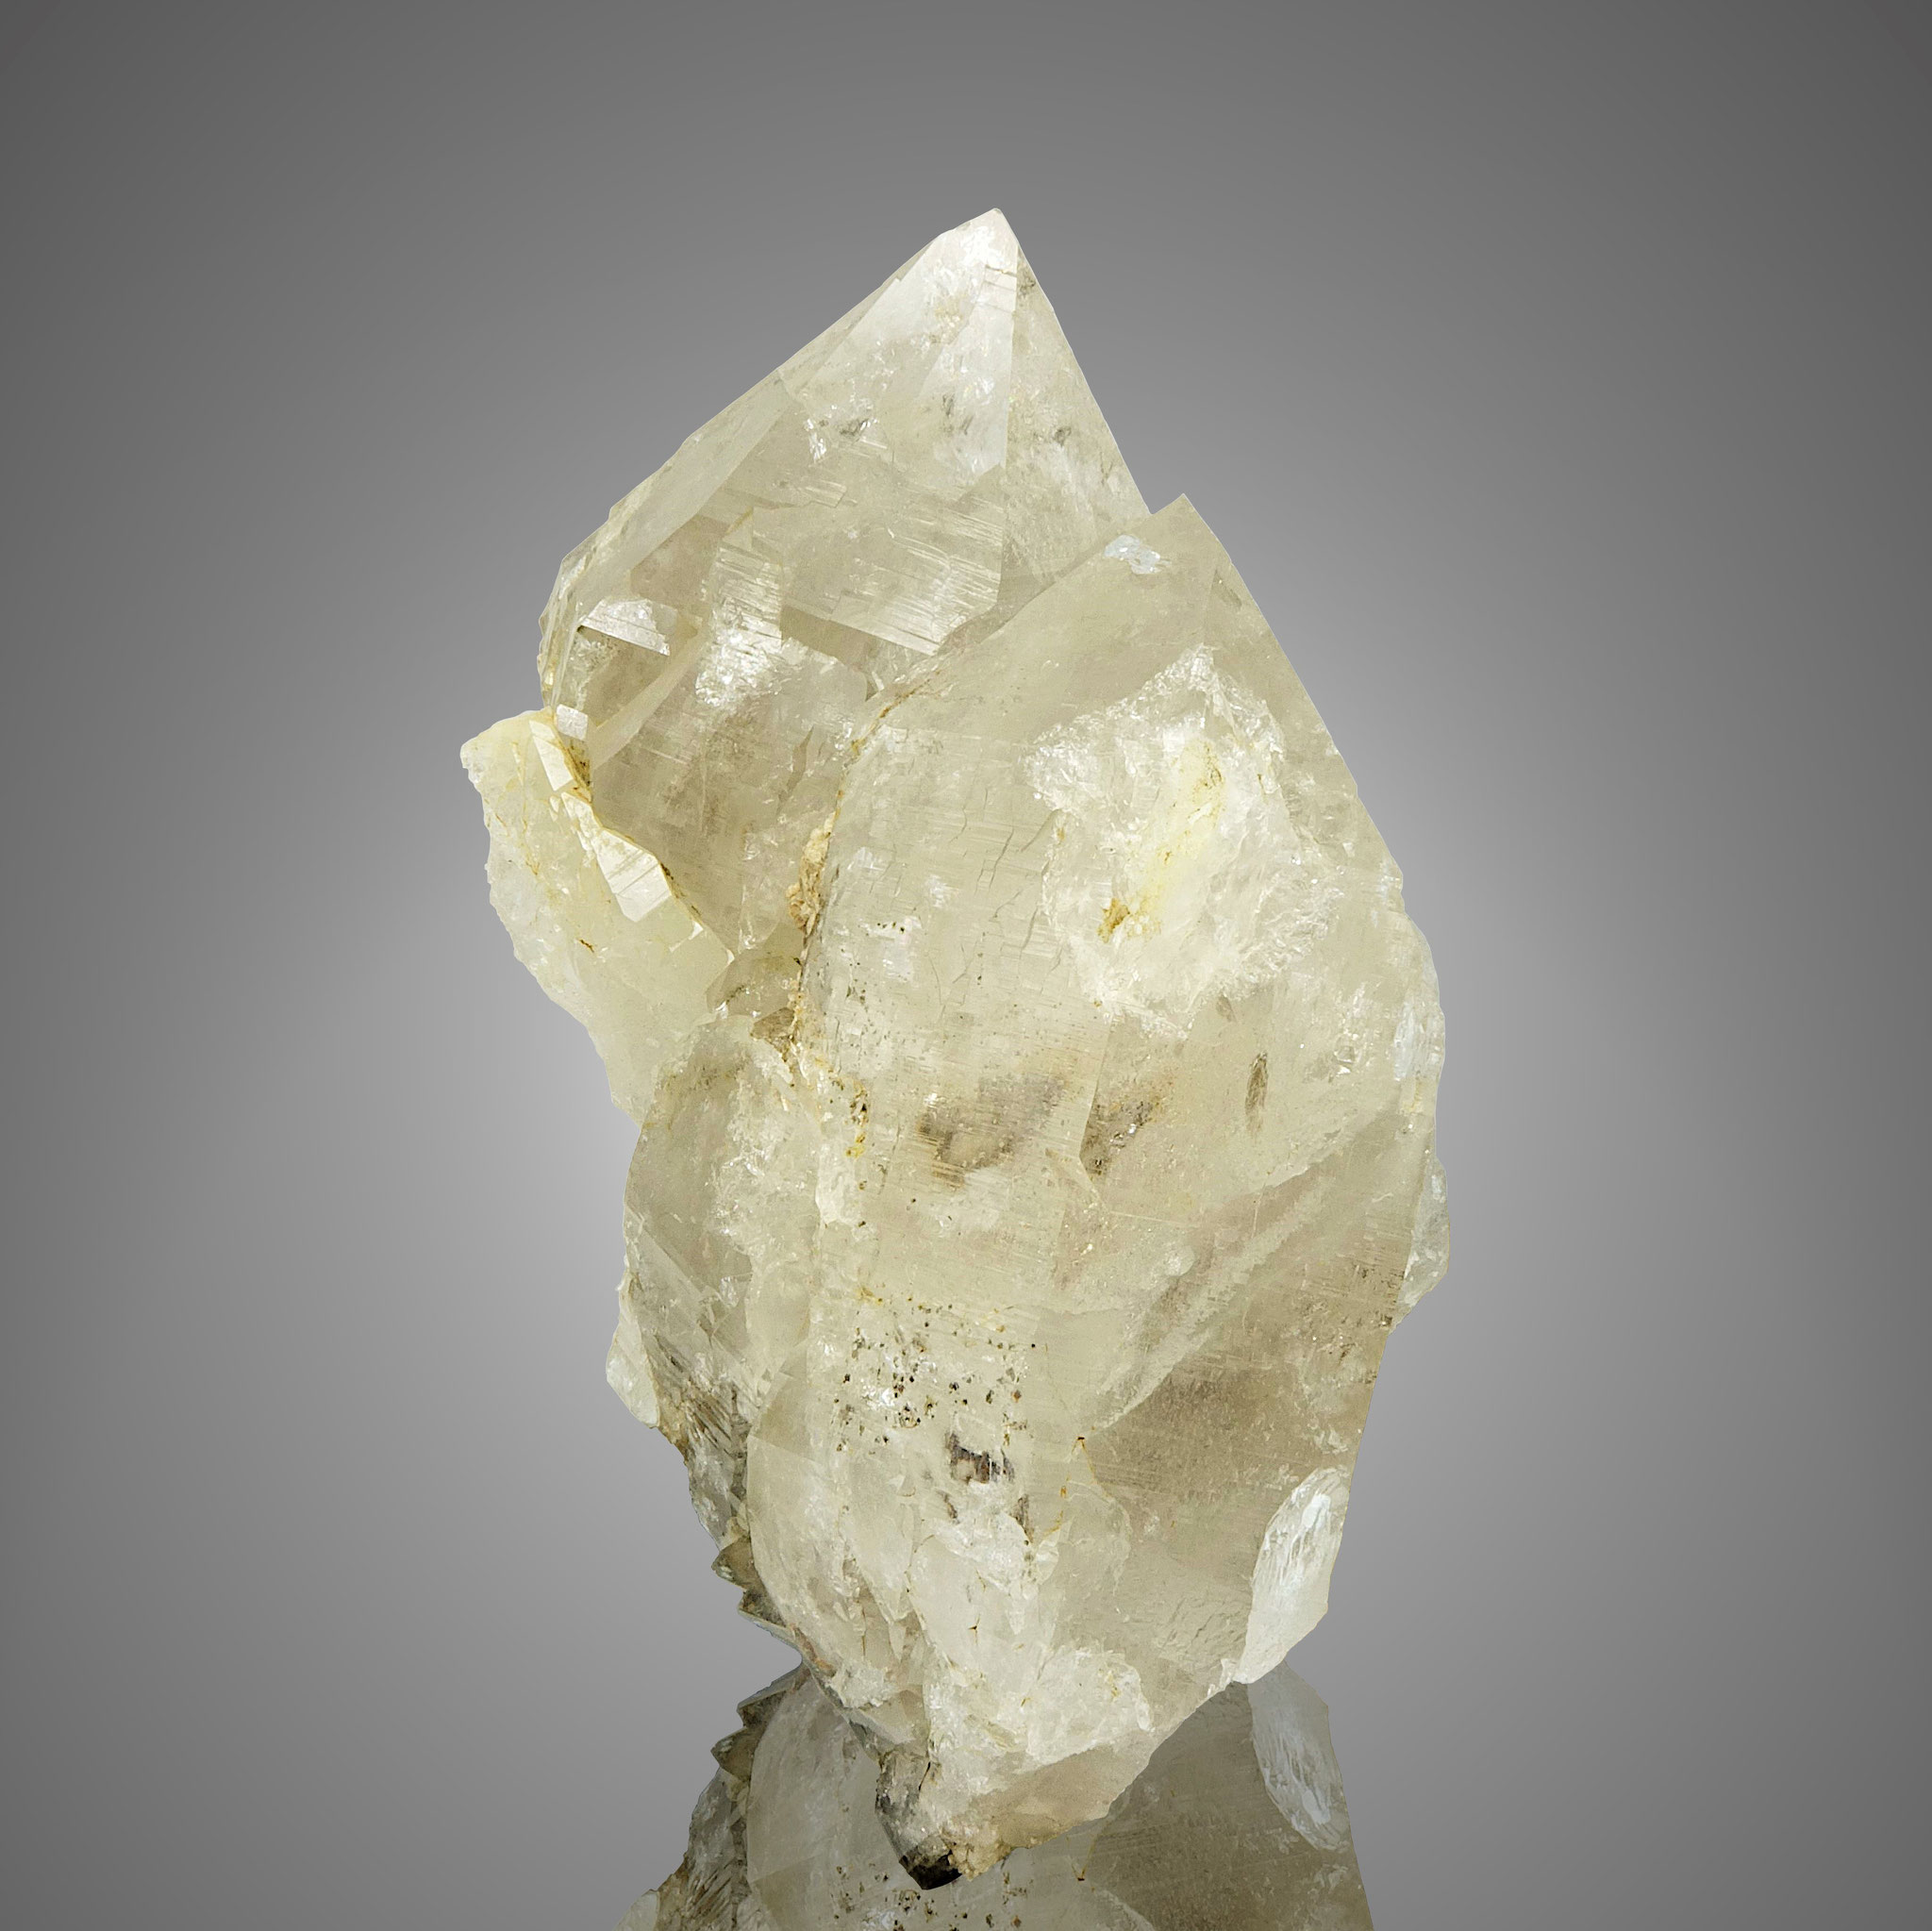 Bergkristall/Albit, "Ameliekluft" Lungau 2015, 16 x 13 x 21 cm